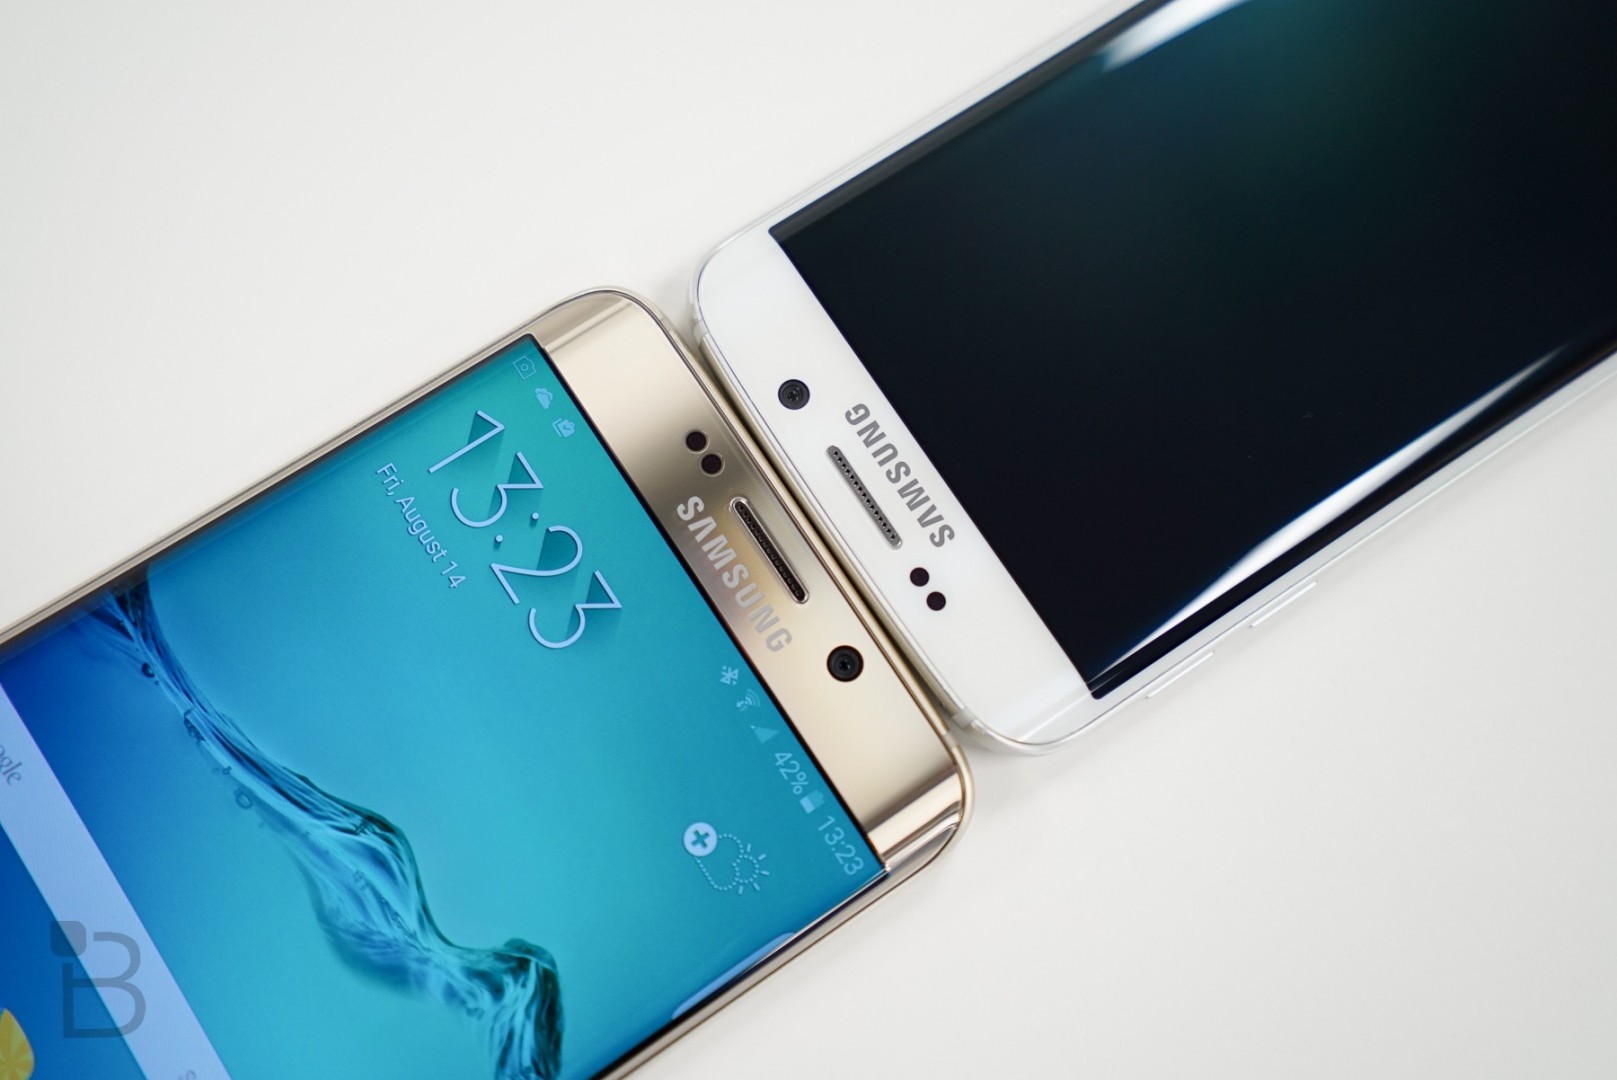 Samsung Galaxy S7 ผ่านการตรวจสอบของ FCC แล้ว